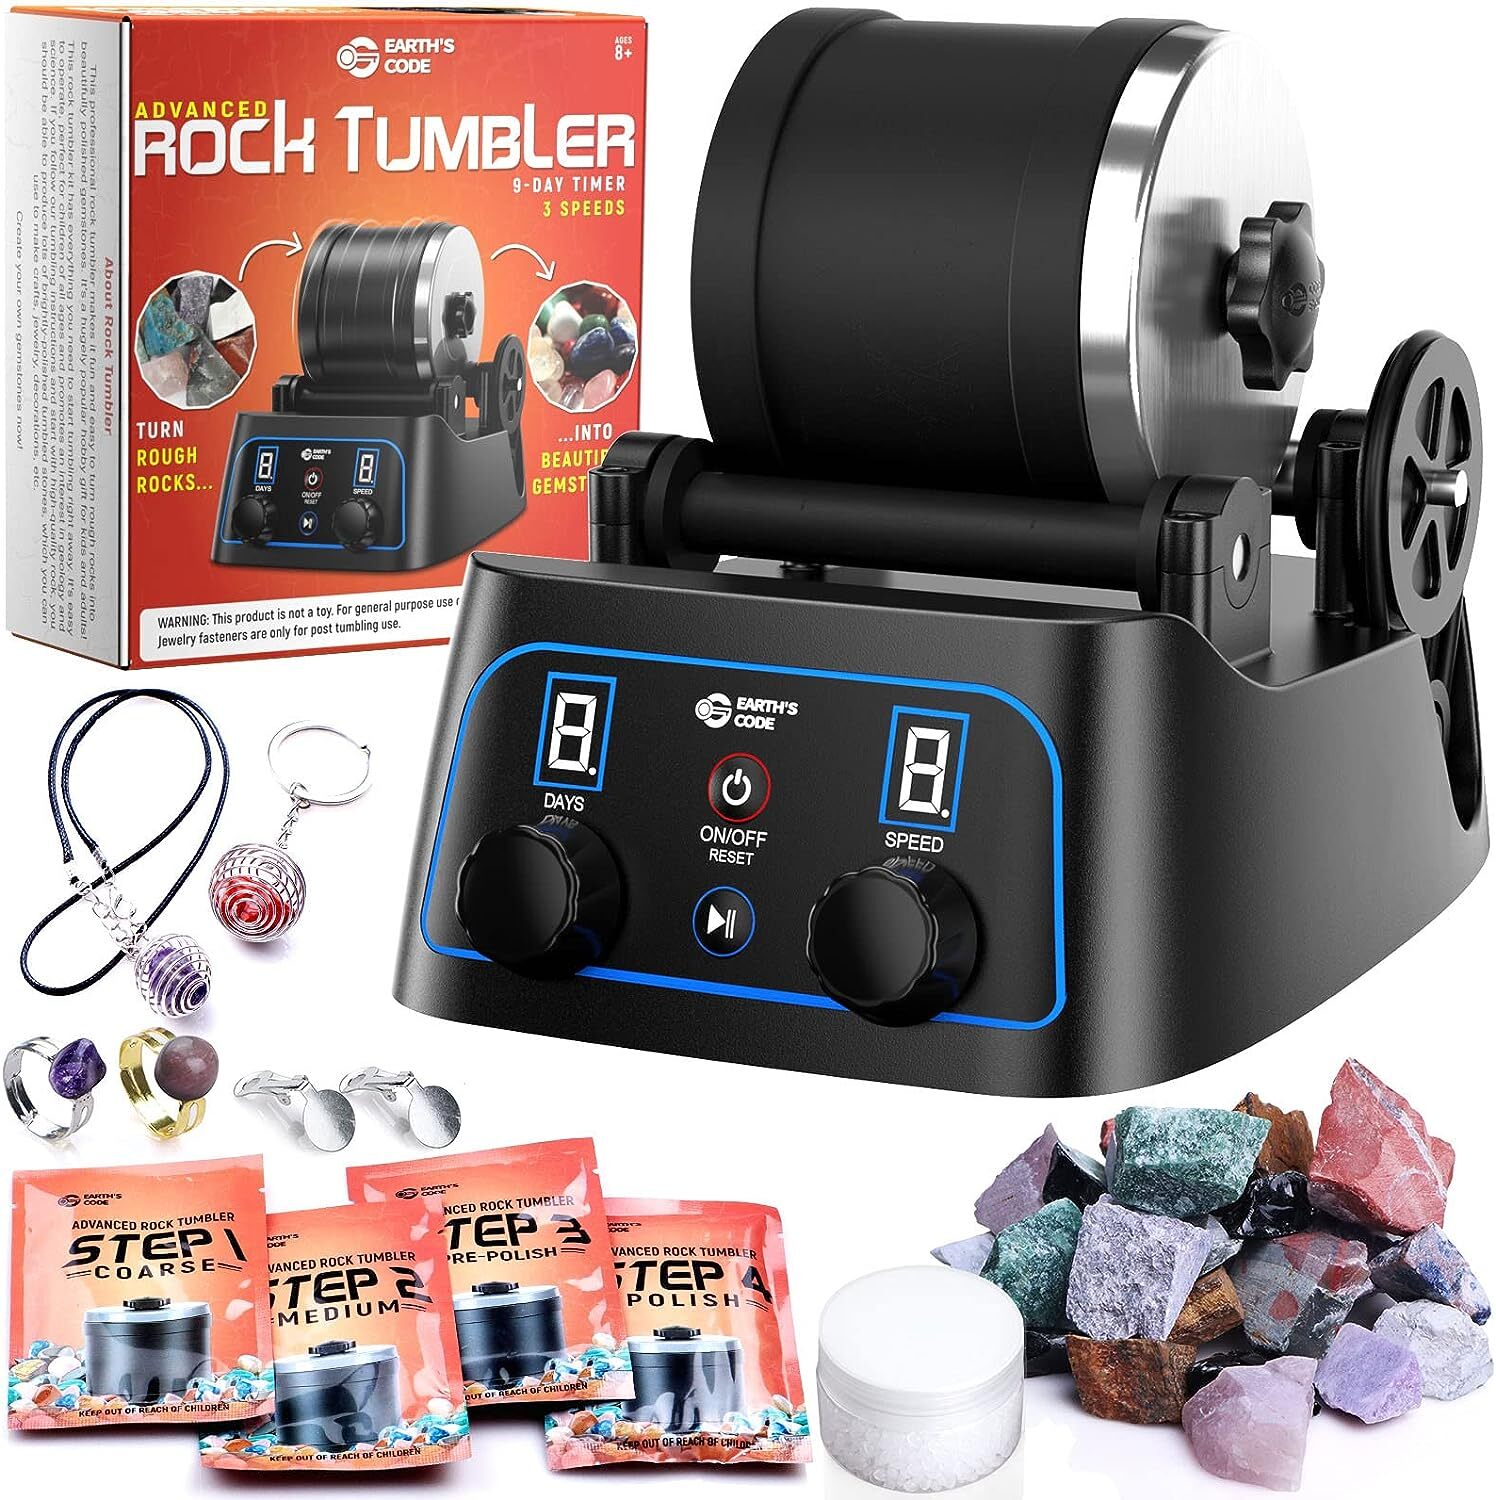  Advanced Rock Tumbler Kit, Professional Rock Polisher Tumbler  Kit With Digital 9-Day Polishing Timer & 3 Speed Settings, 4 Polishing  Grits, Rough Gemstones, STEM Science Kit For Adults Kid : Toys